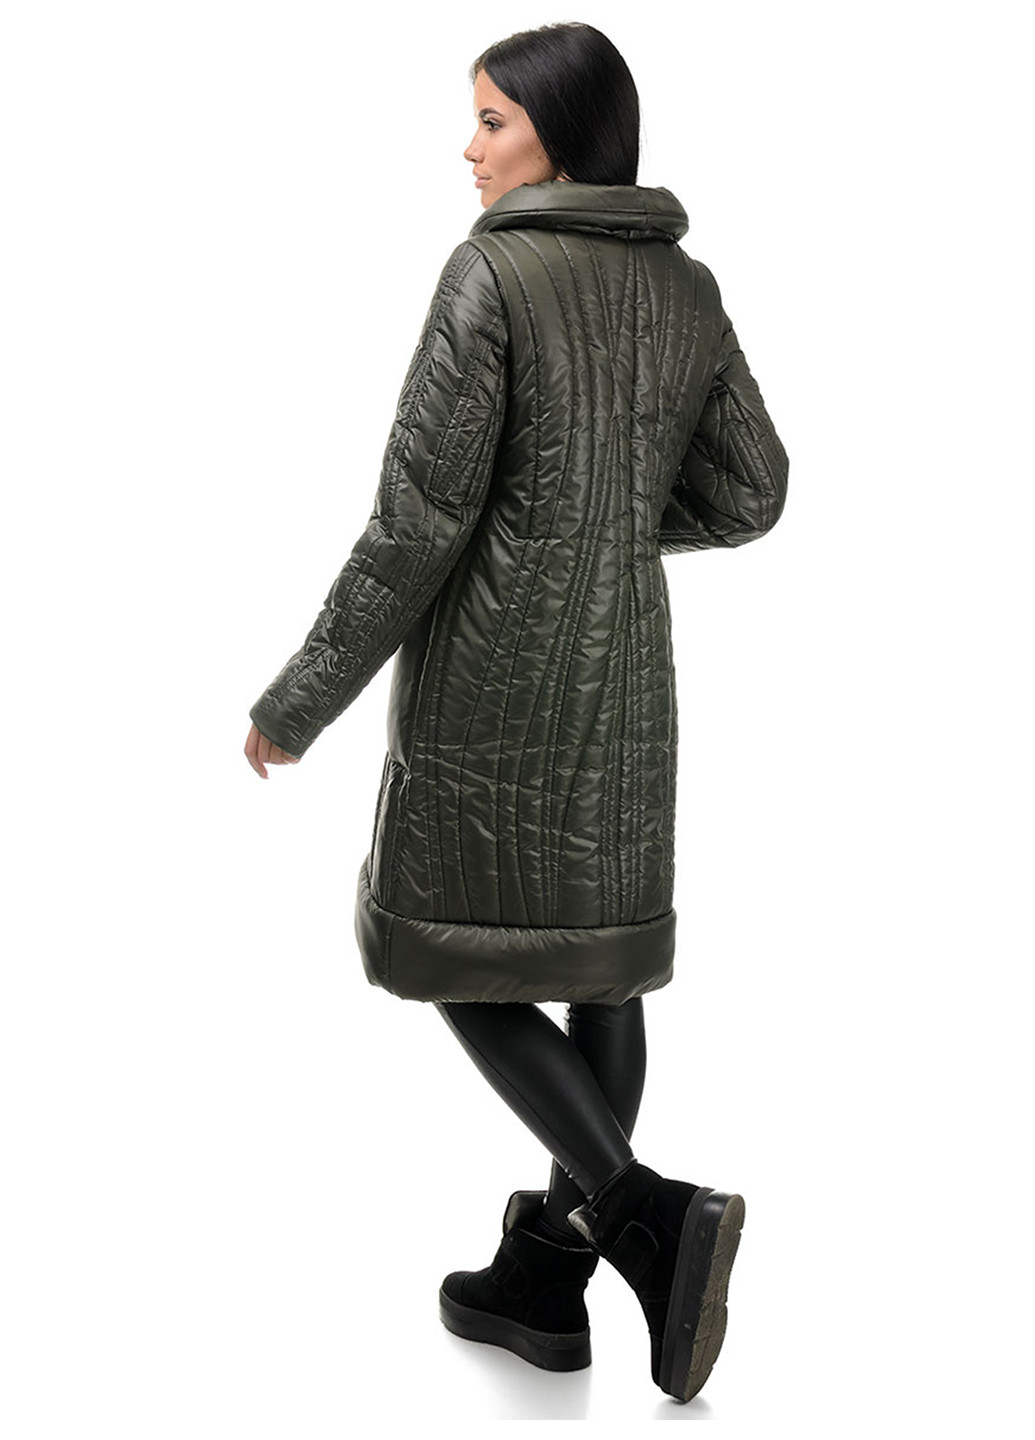 Оливковая (хаки) зимняя куртка A.G.